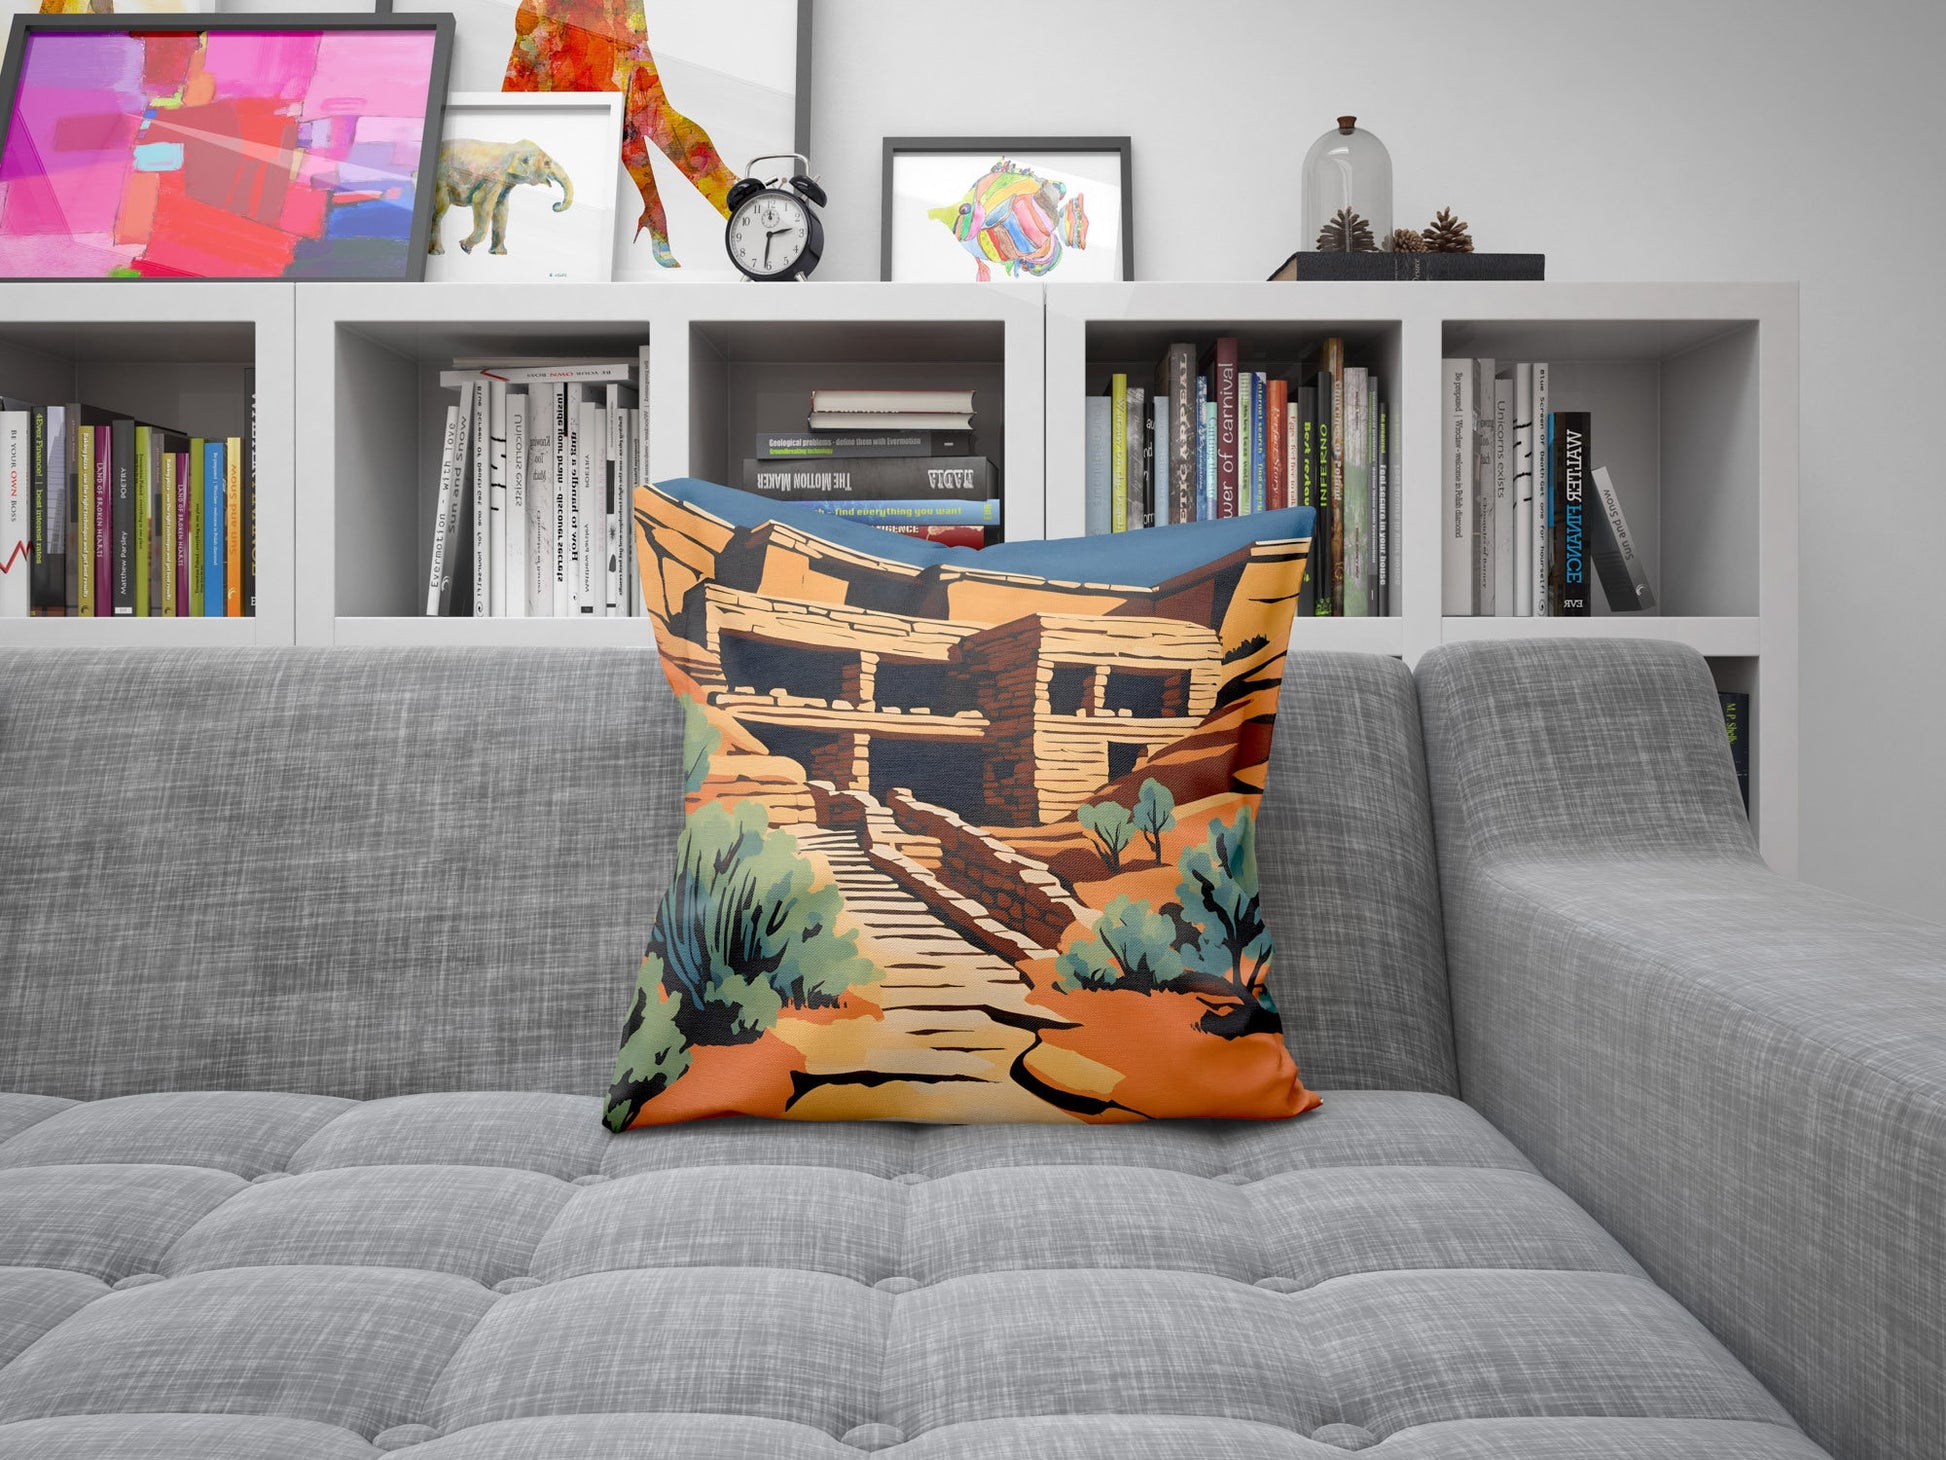 Mesa Verde National Park, Colorado Tapestry Pillows, Usa Travel Pillow, Soft Pillow Cases, 18 X 18 Pillow Covers, Home Decor Pillow